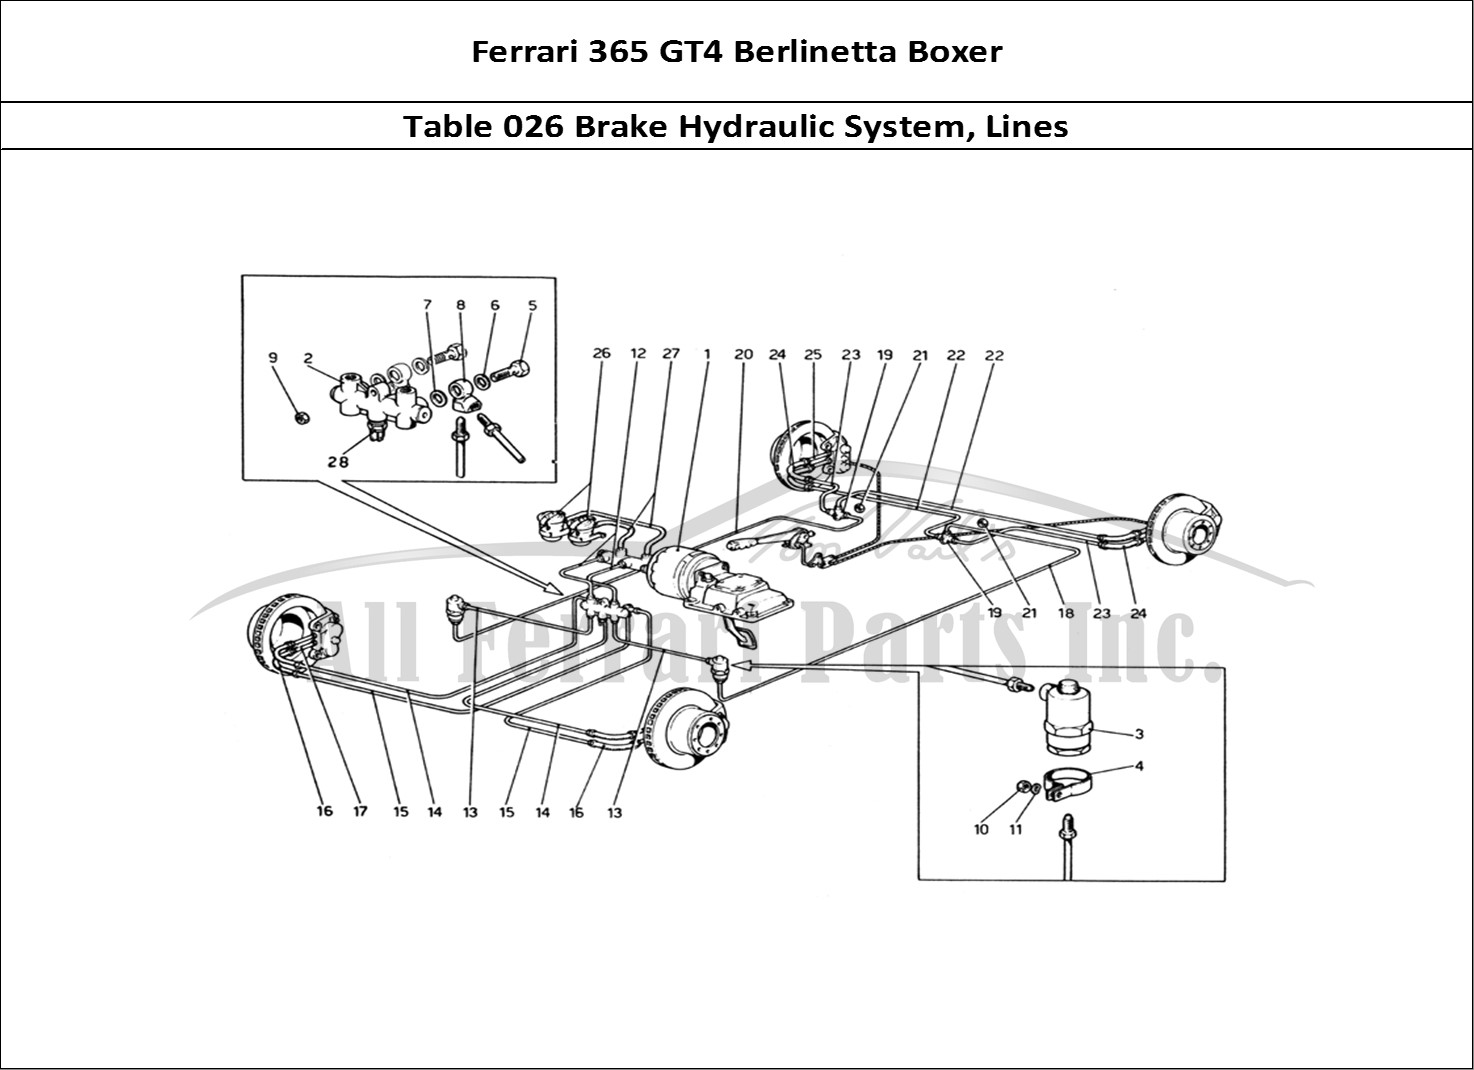 Ferrari Parts Ferrari 365 GT4 Berlinetta Boxer Page 026 Brake System